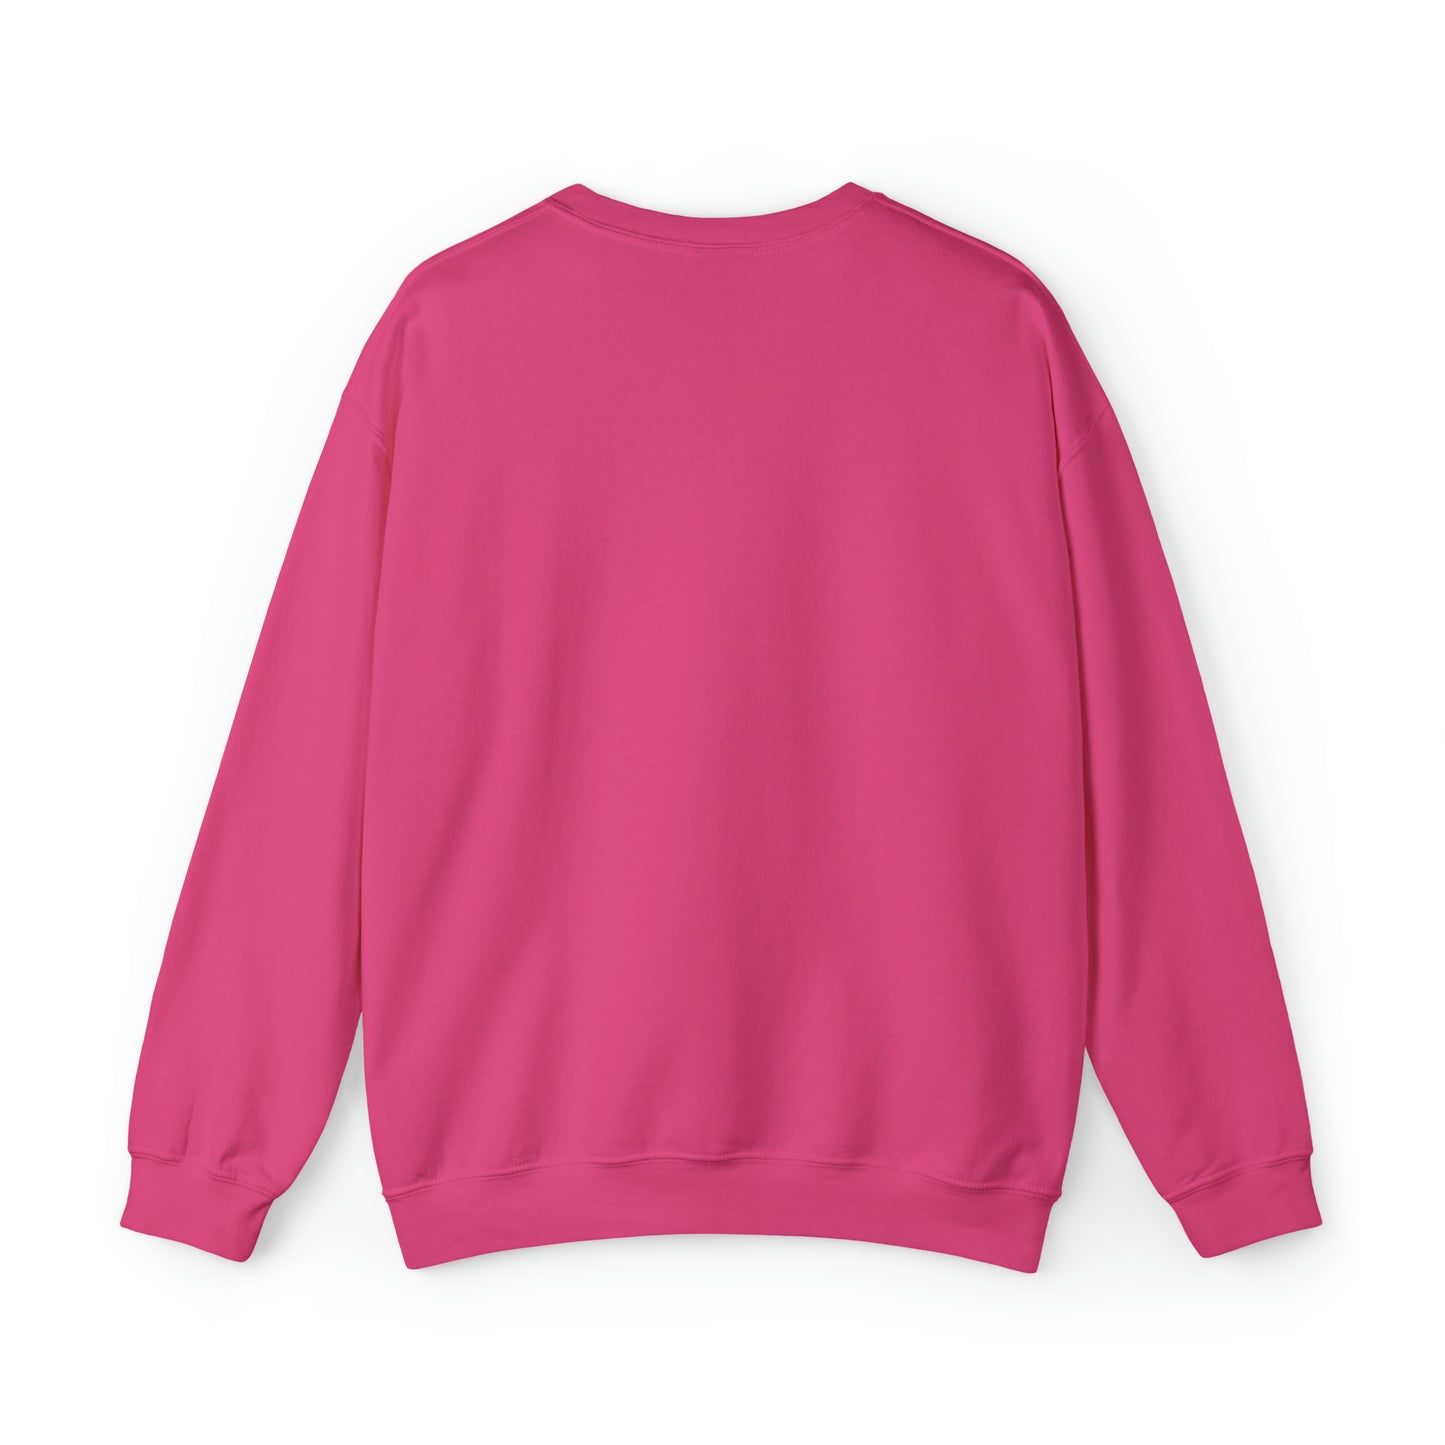 Brittany Unisex Heavy Blend™ Crewneck Sweatshirt